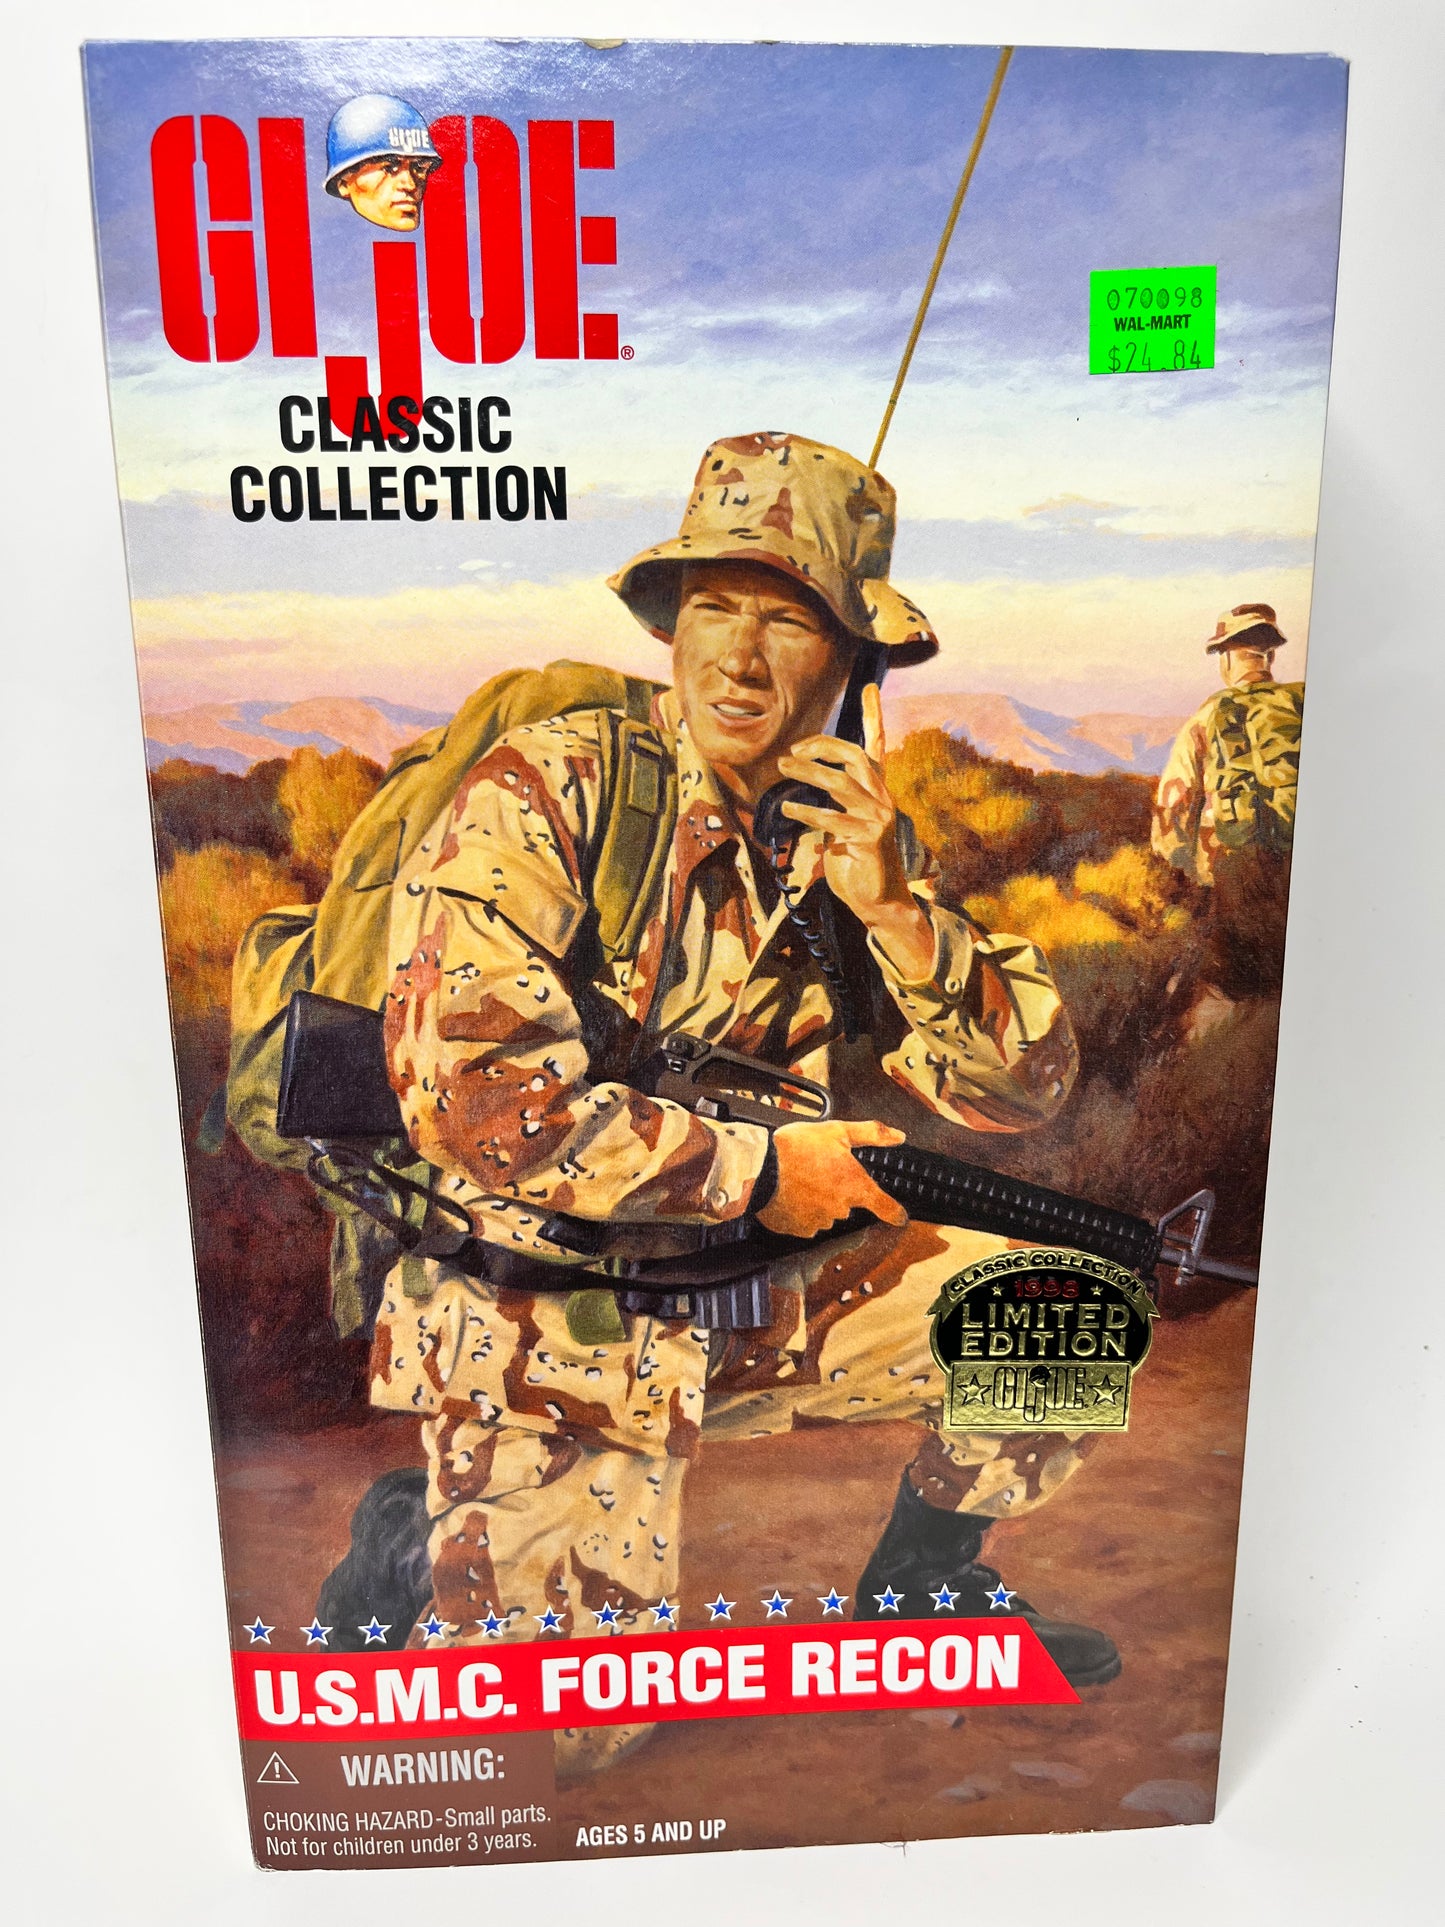 Hasbro GI Joe Classic Collection U.S.M.C. Force Recon 1997